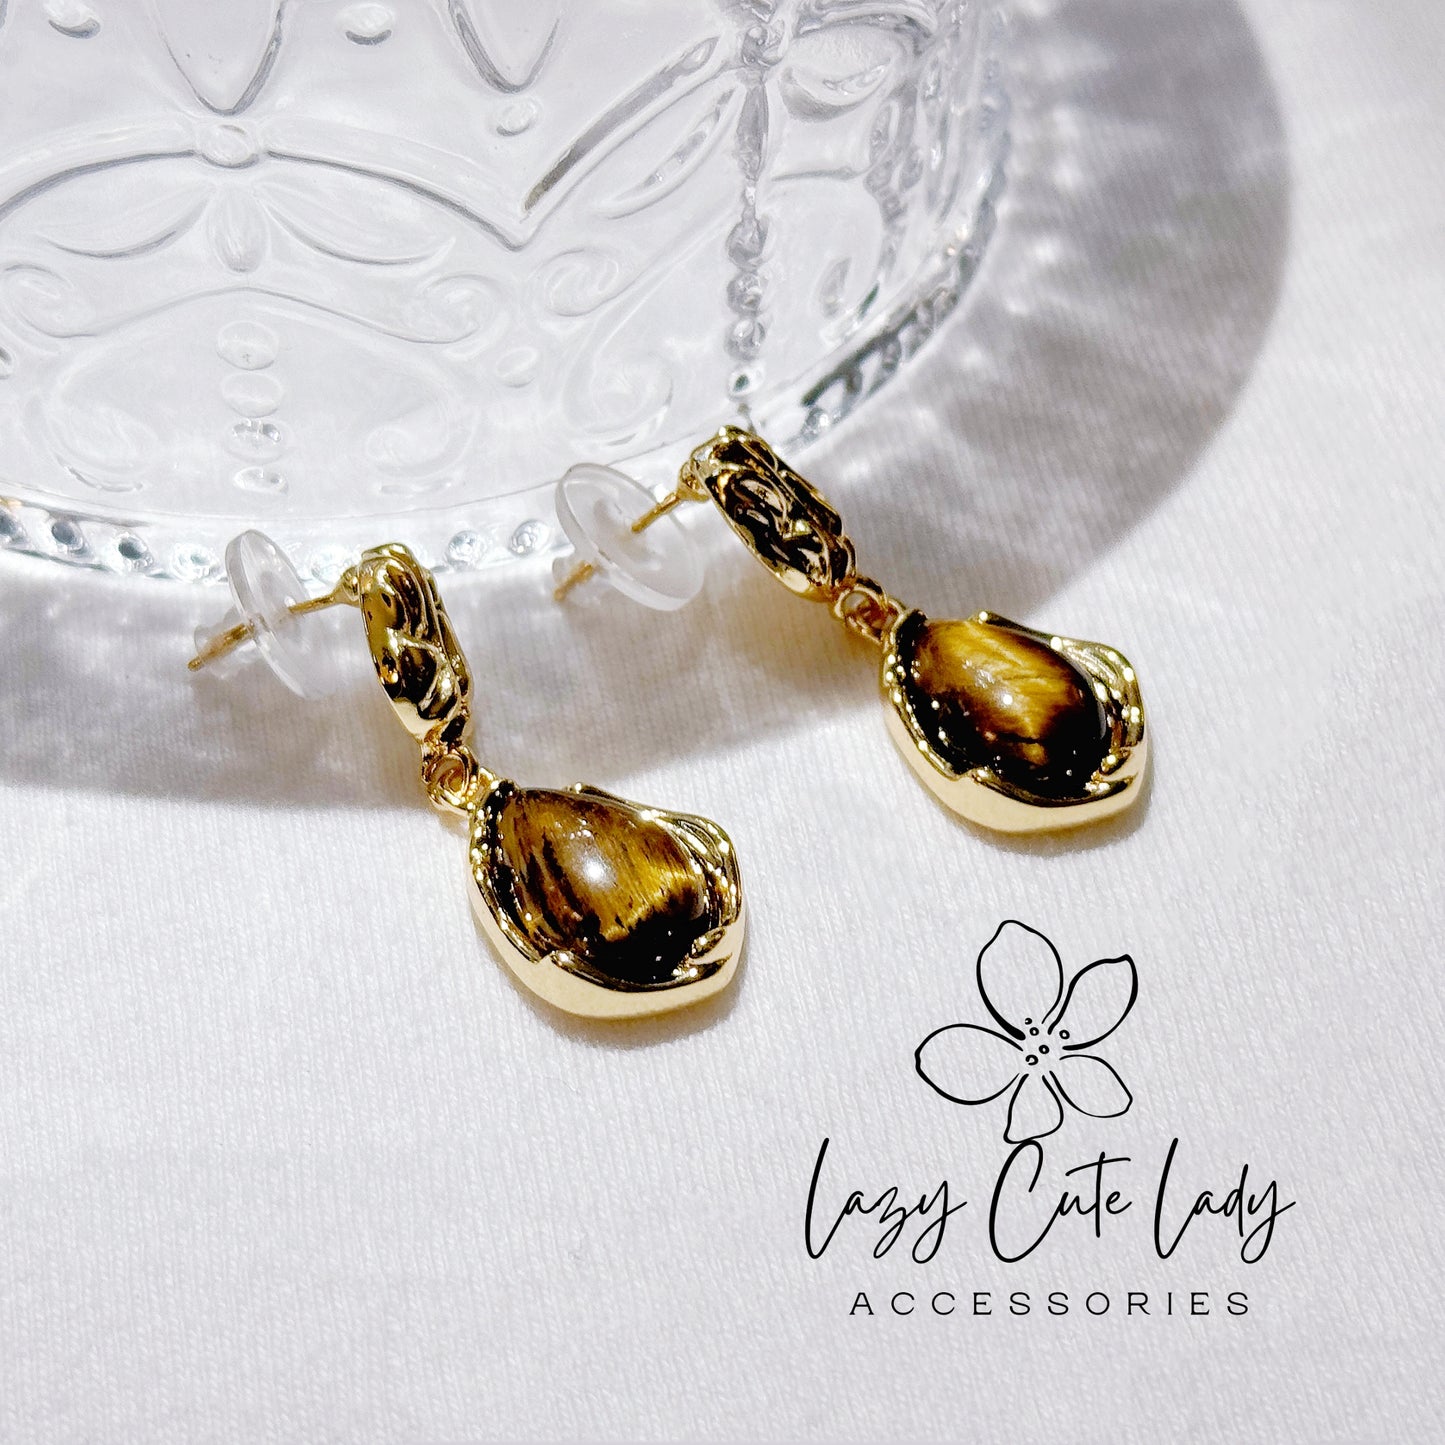 Lazy Cute Lady Accessories-Vintage Elegance: Tiger's Eye Drop Earrings- stone accessory- stone earrings- gift